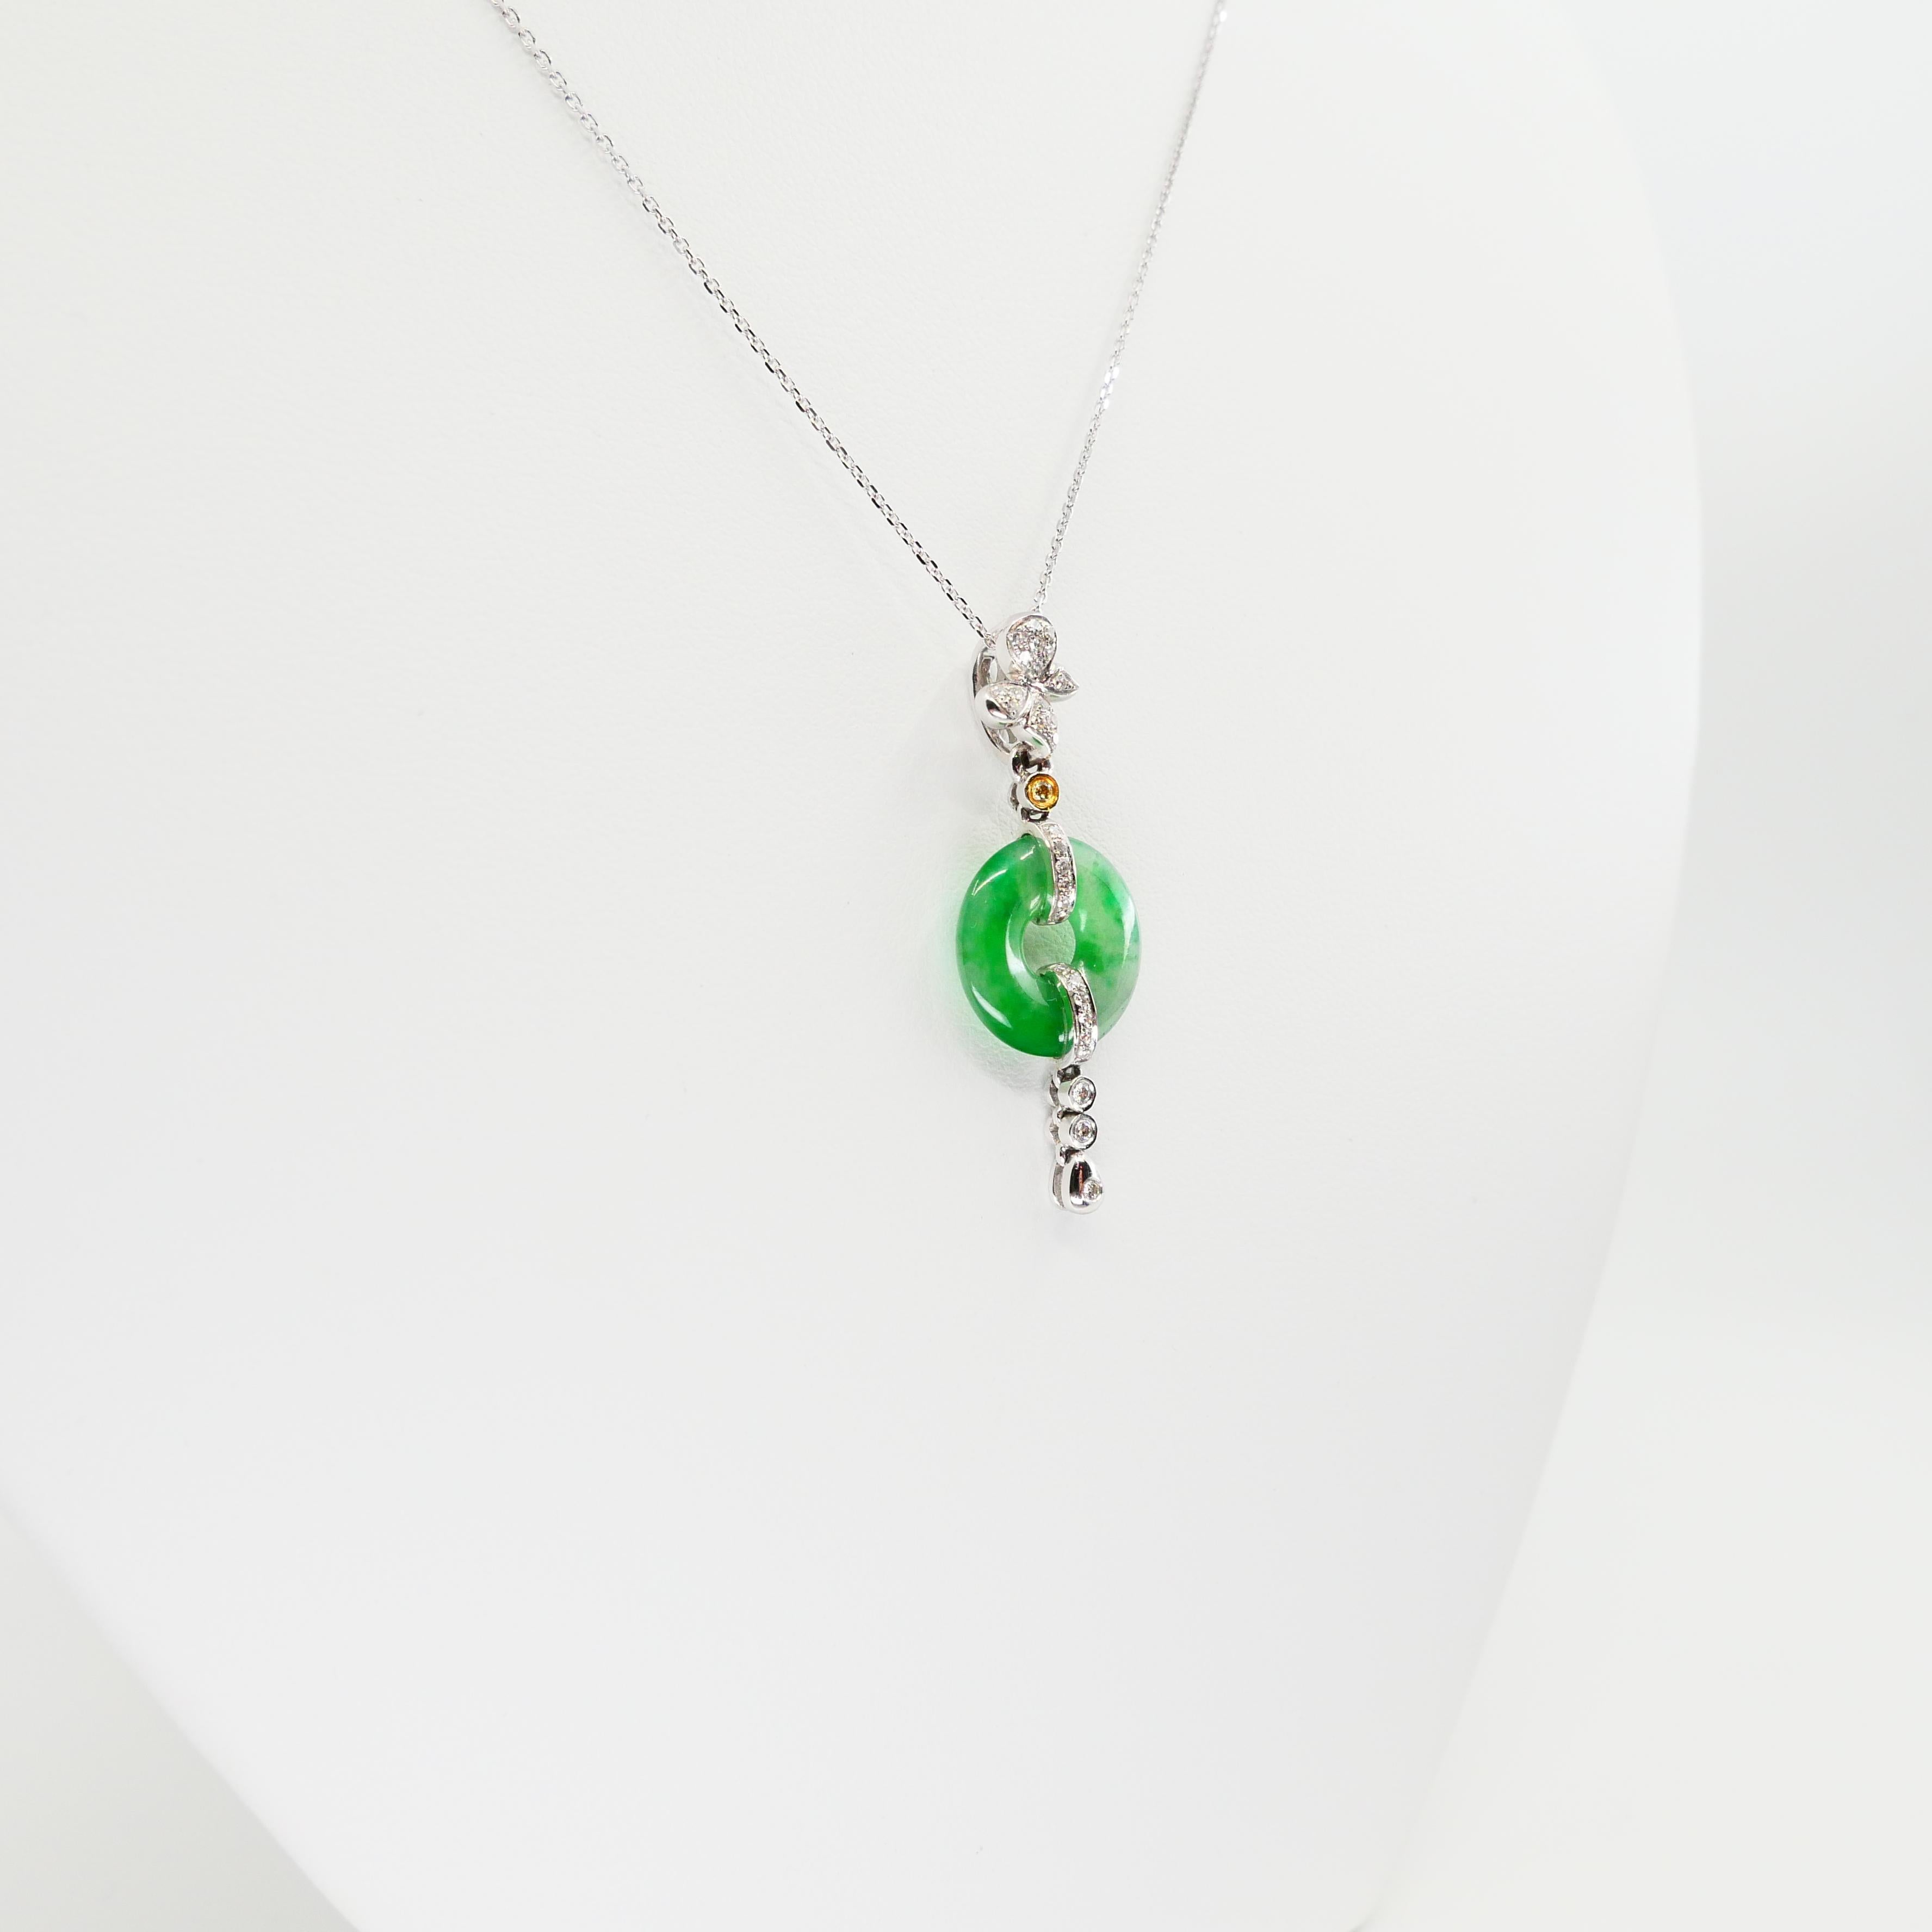 Certified Type A Jadeite Jade Diamond Pendant Drop Necklace, Apple Green Veins For Sale 1